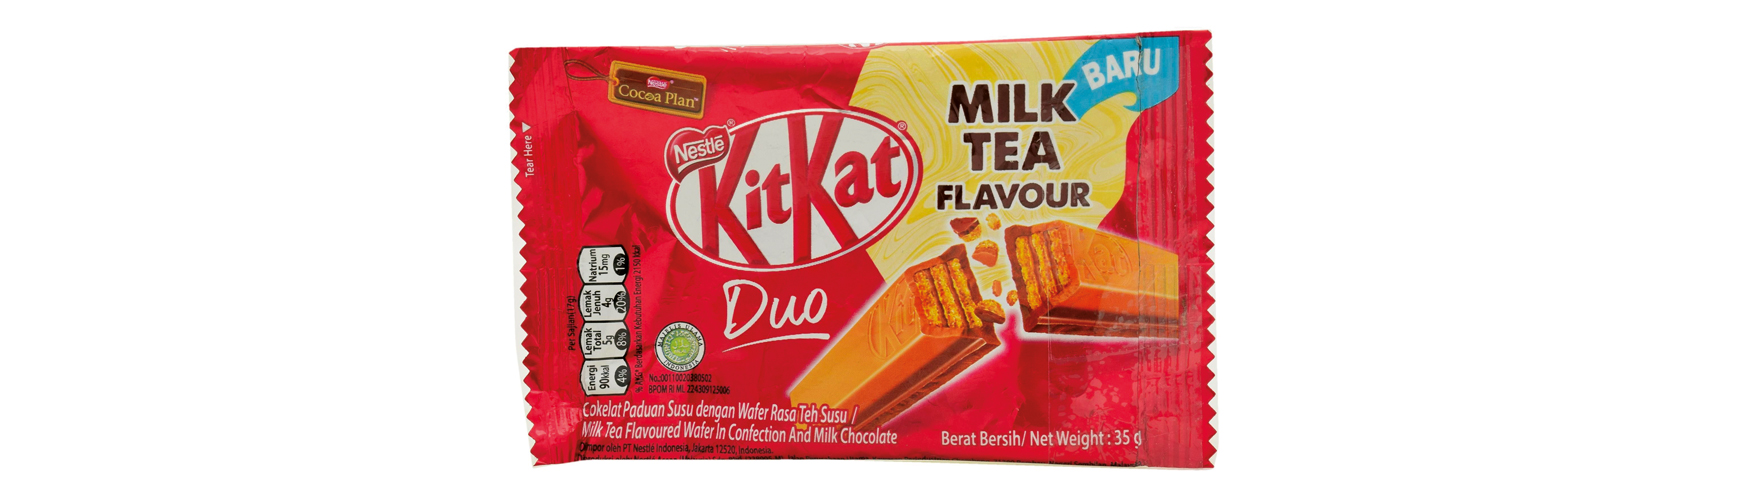 Kit Kat con sabor a té y chocolate con leche (1)